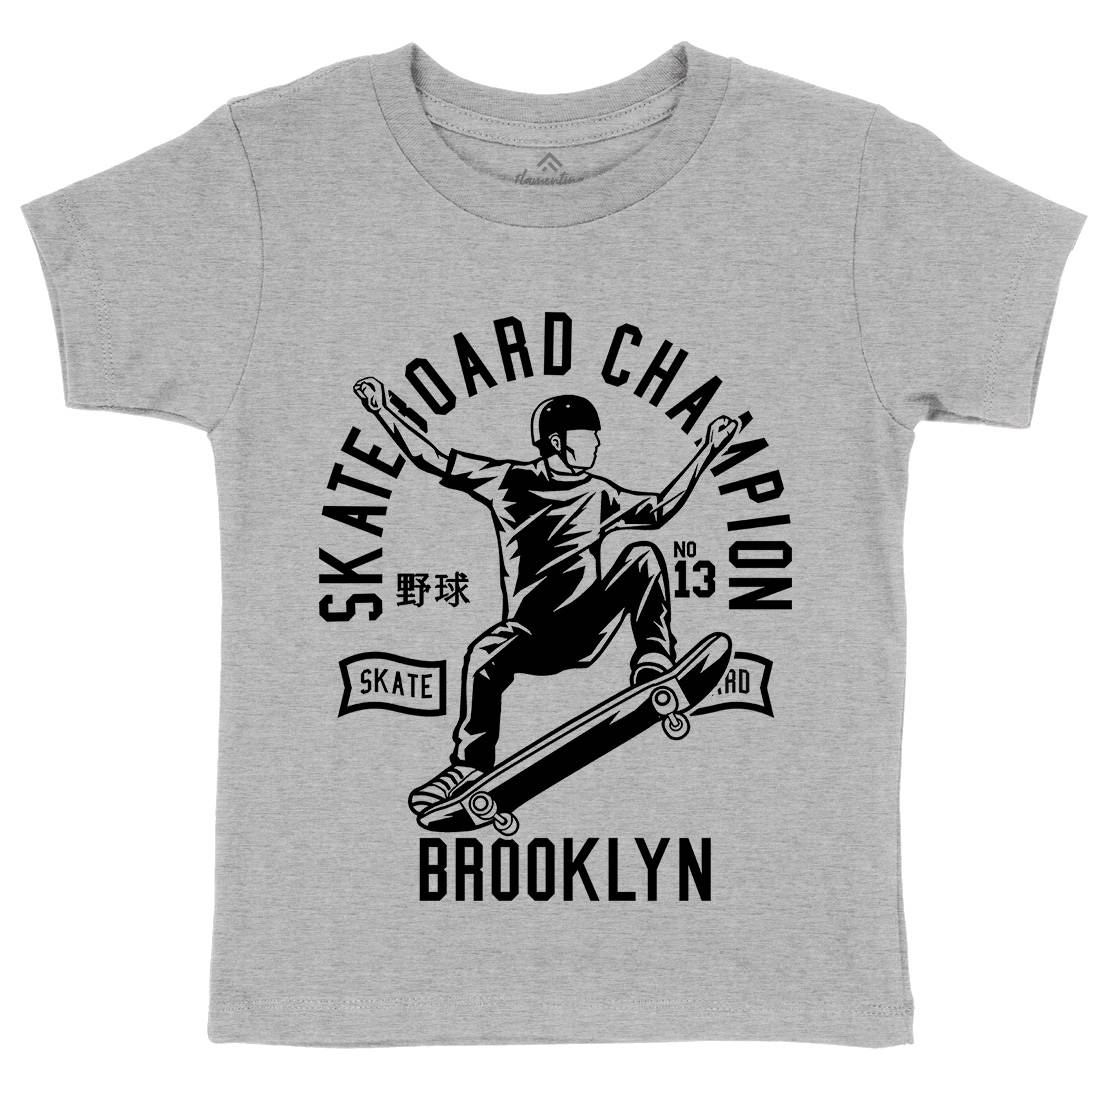 Skateboard Champion Kids Crew Neck T-Shirt Skate B622